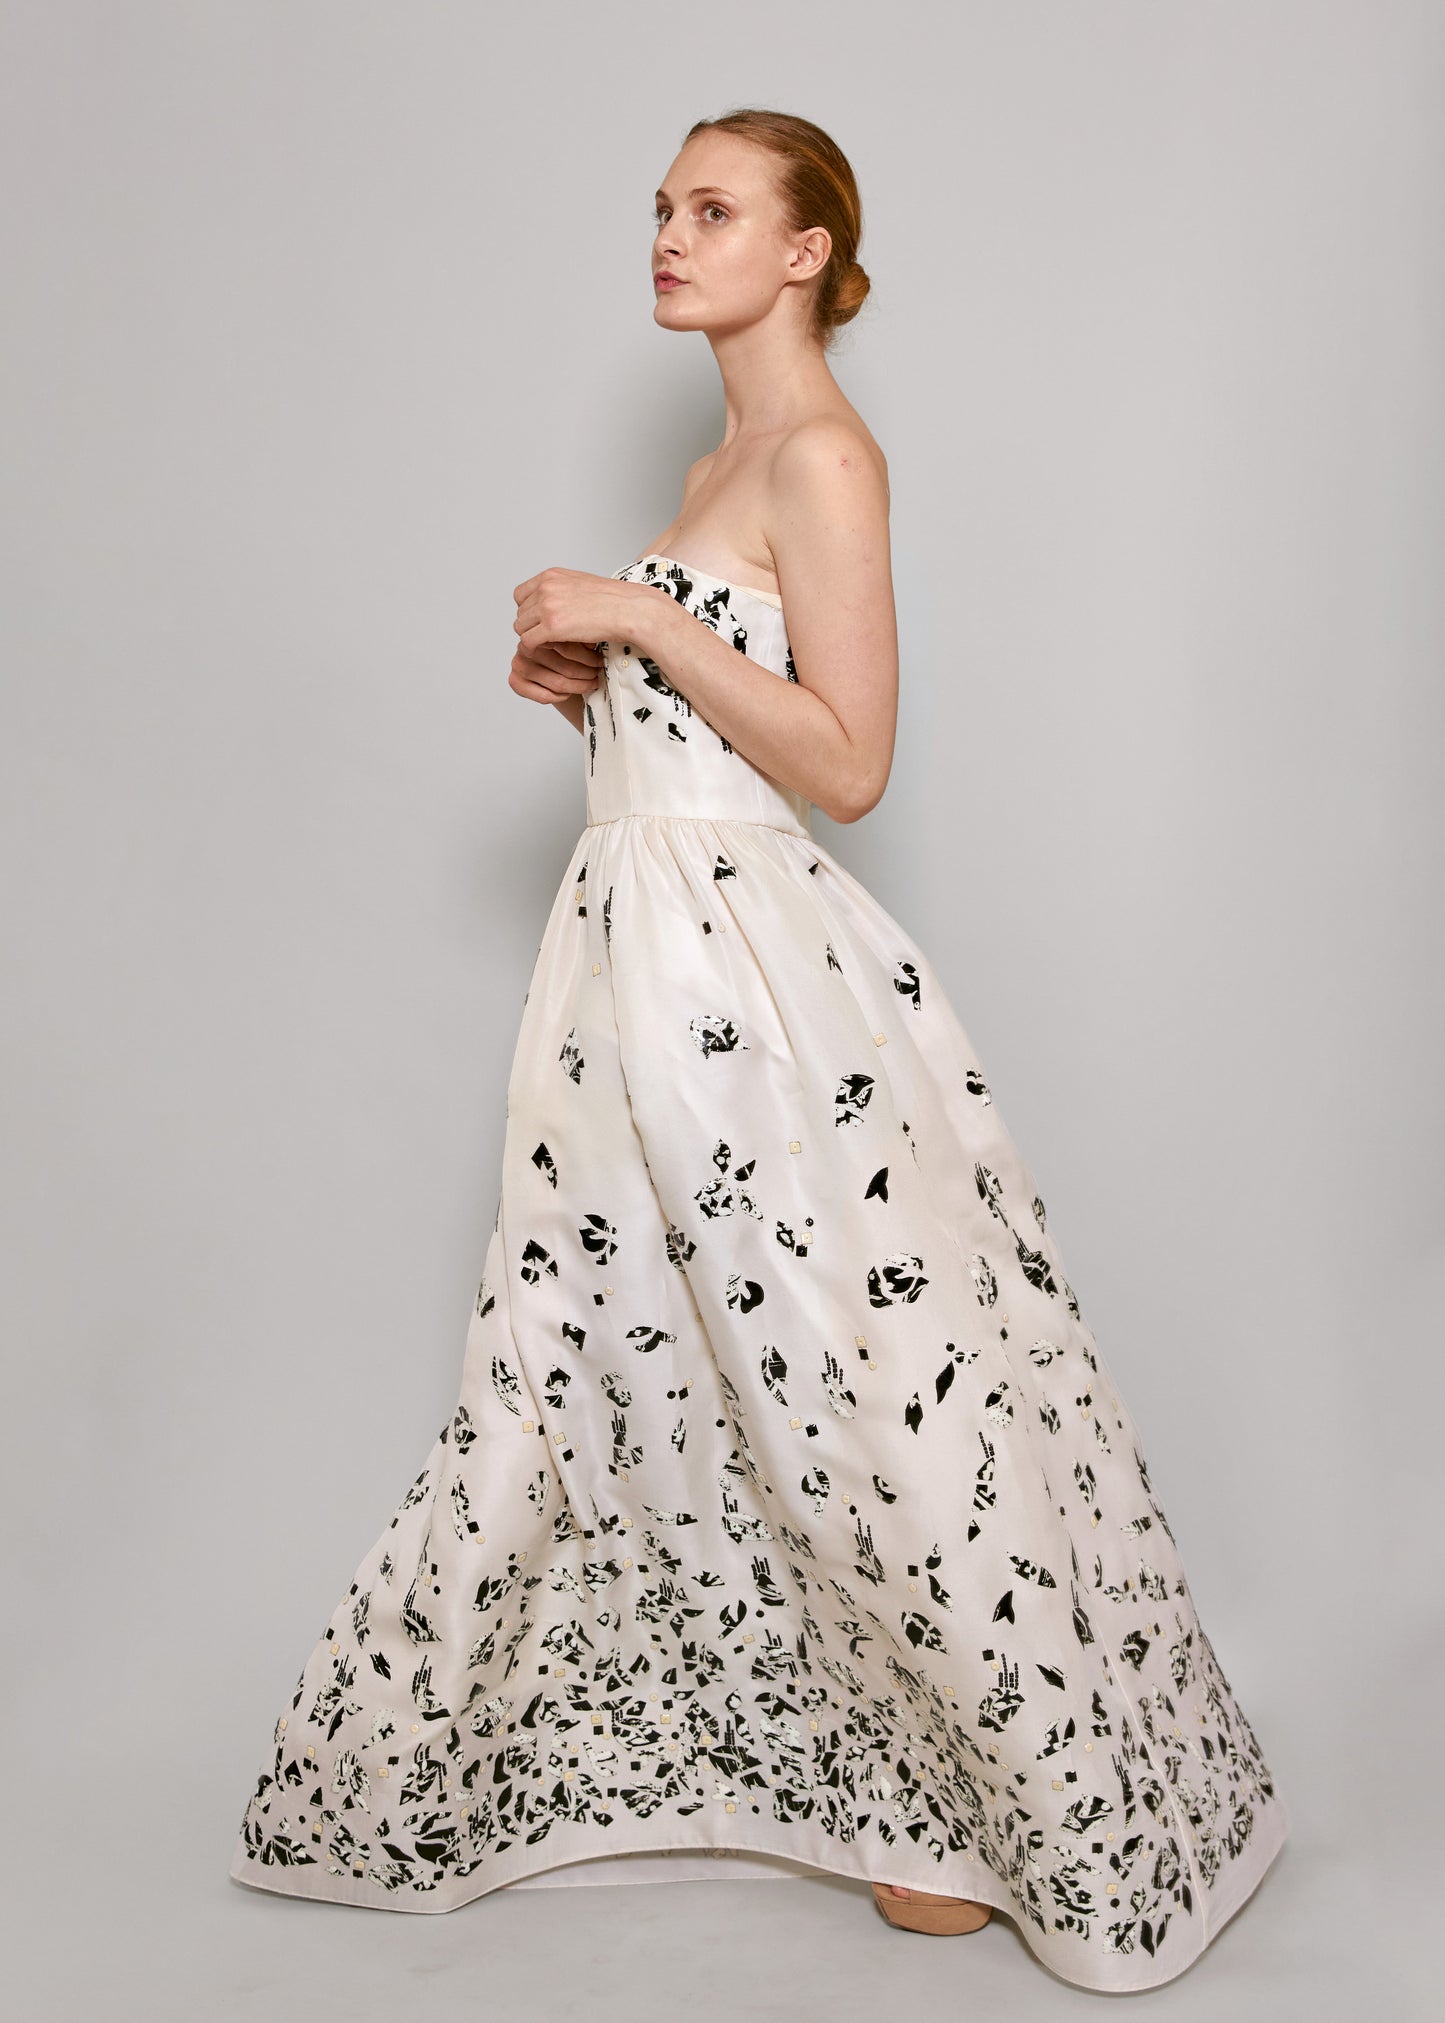 Oscar De La Renta White Strapless Gown with Ornamentation Resort 2010